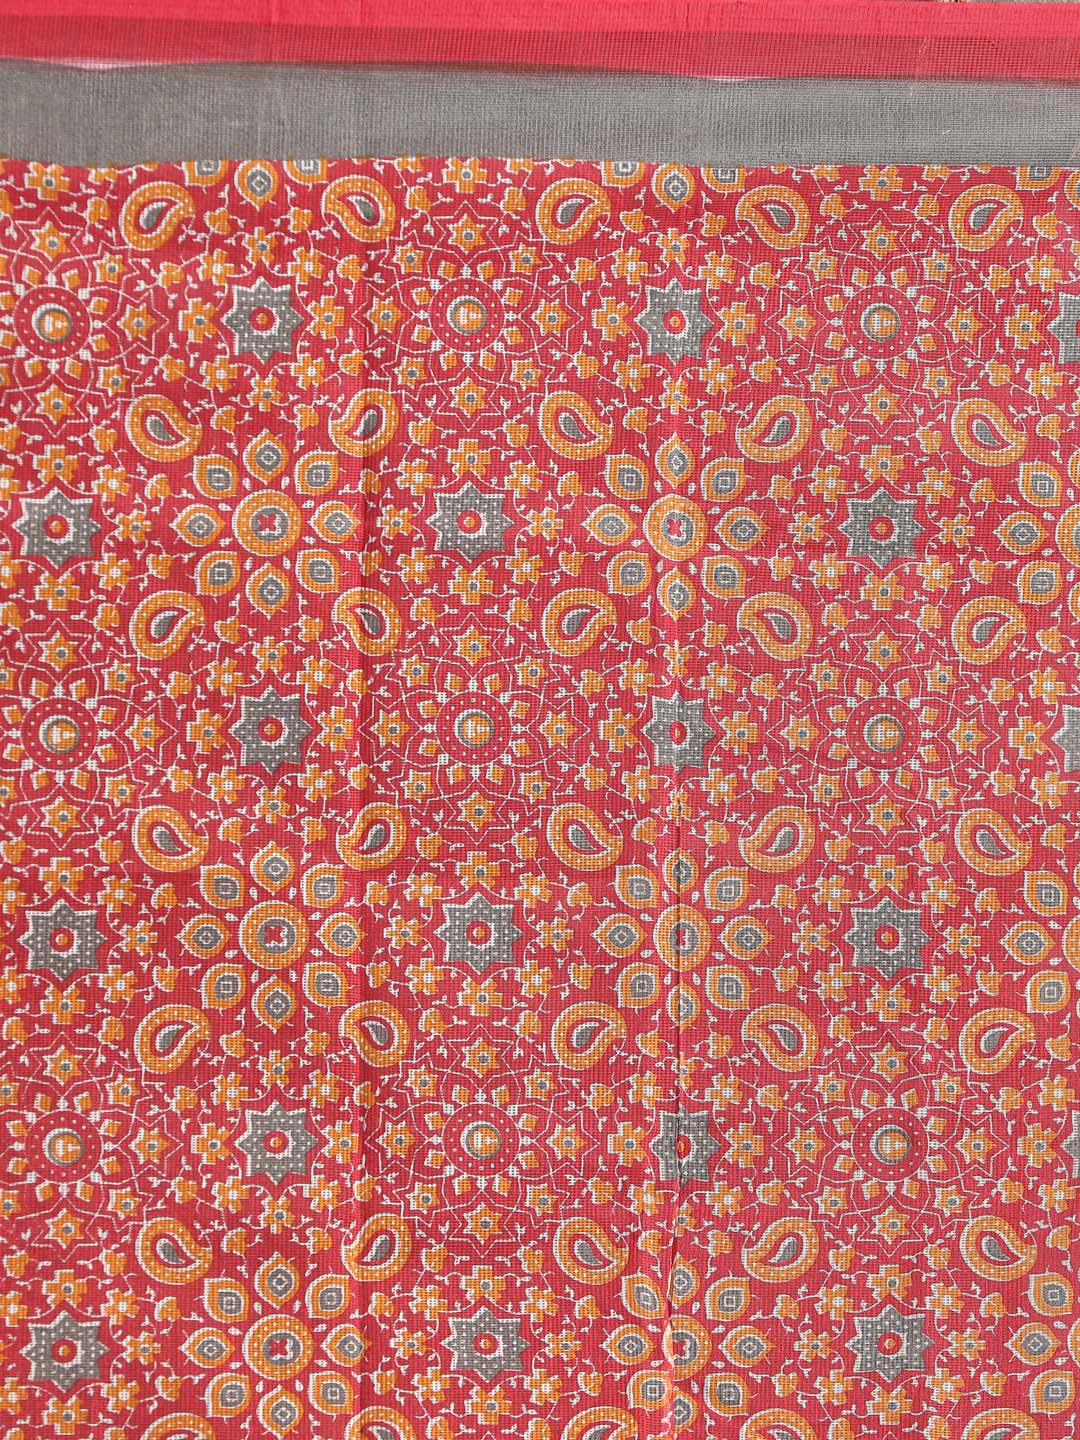 Indethnic Printed Super Net Saree in Magenta - Saree Detail View